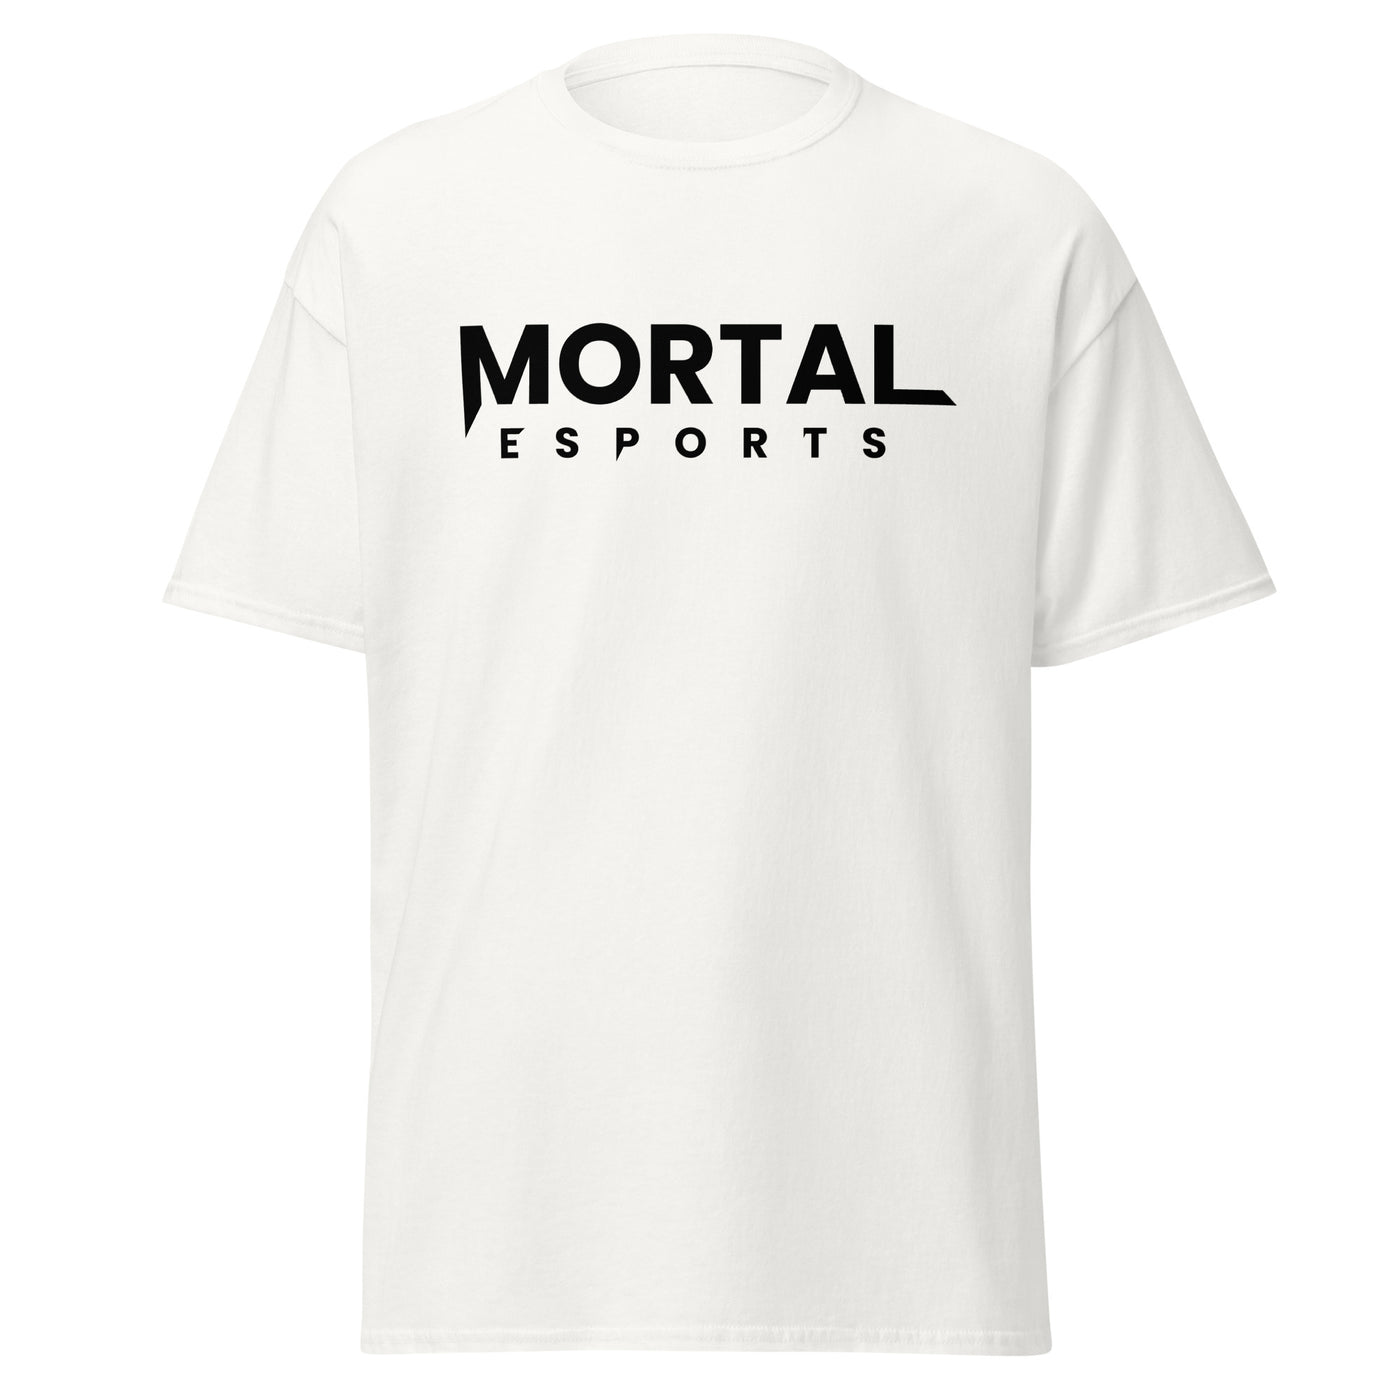 Mortal Esports Unisex T-Shirt